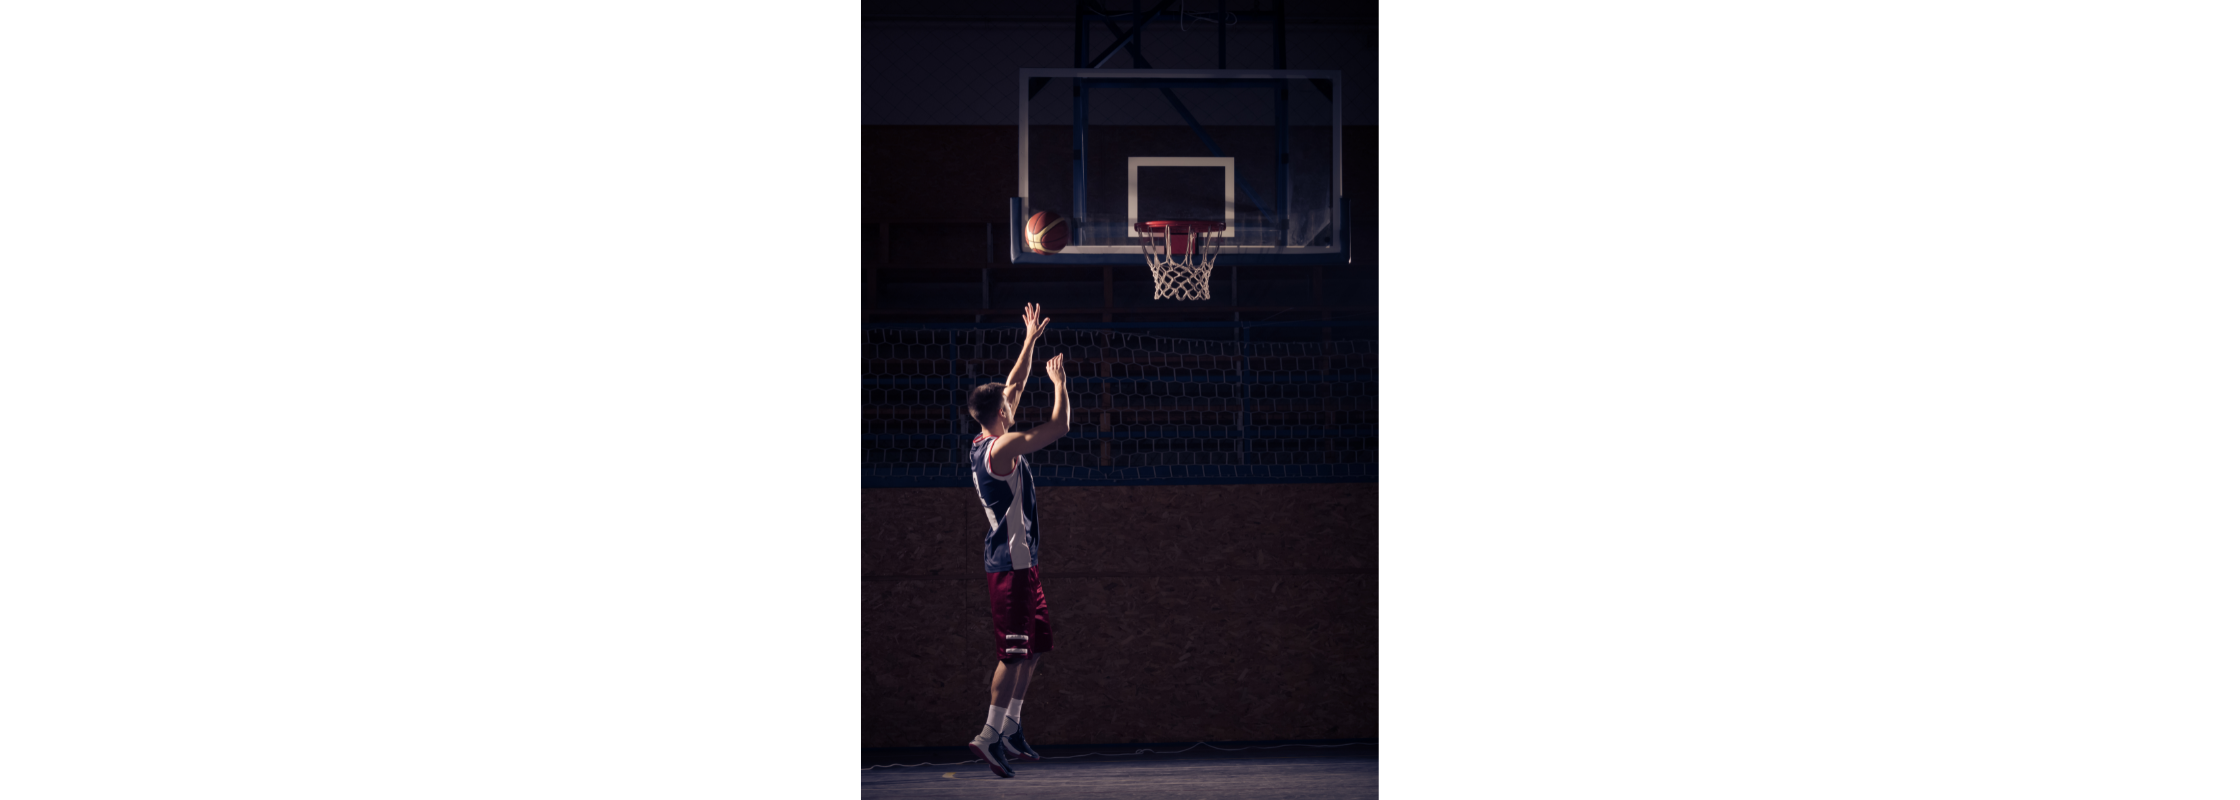 Reggie Miller Basketball Shooting